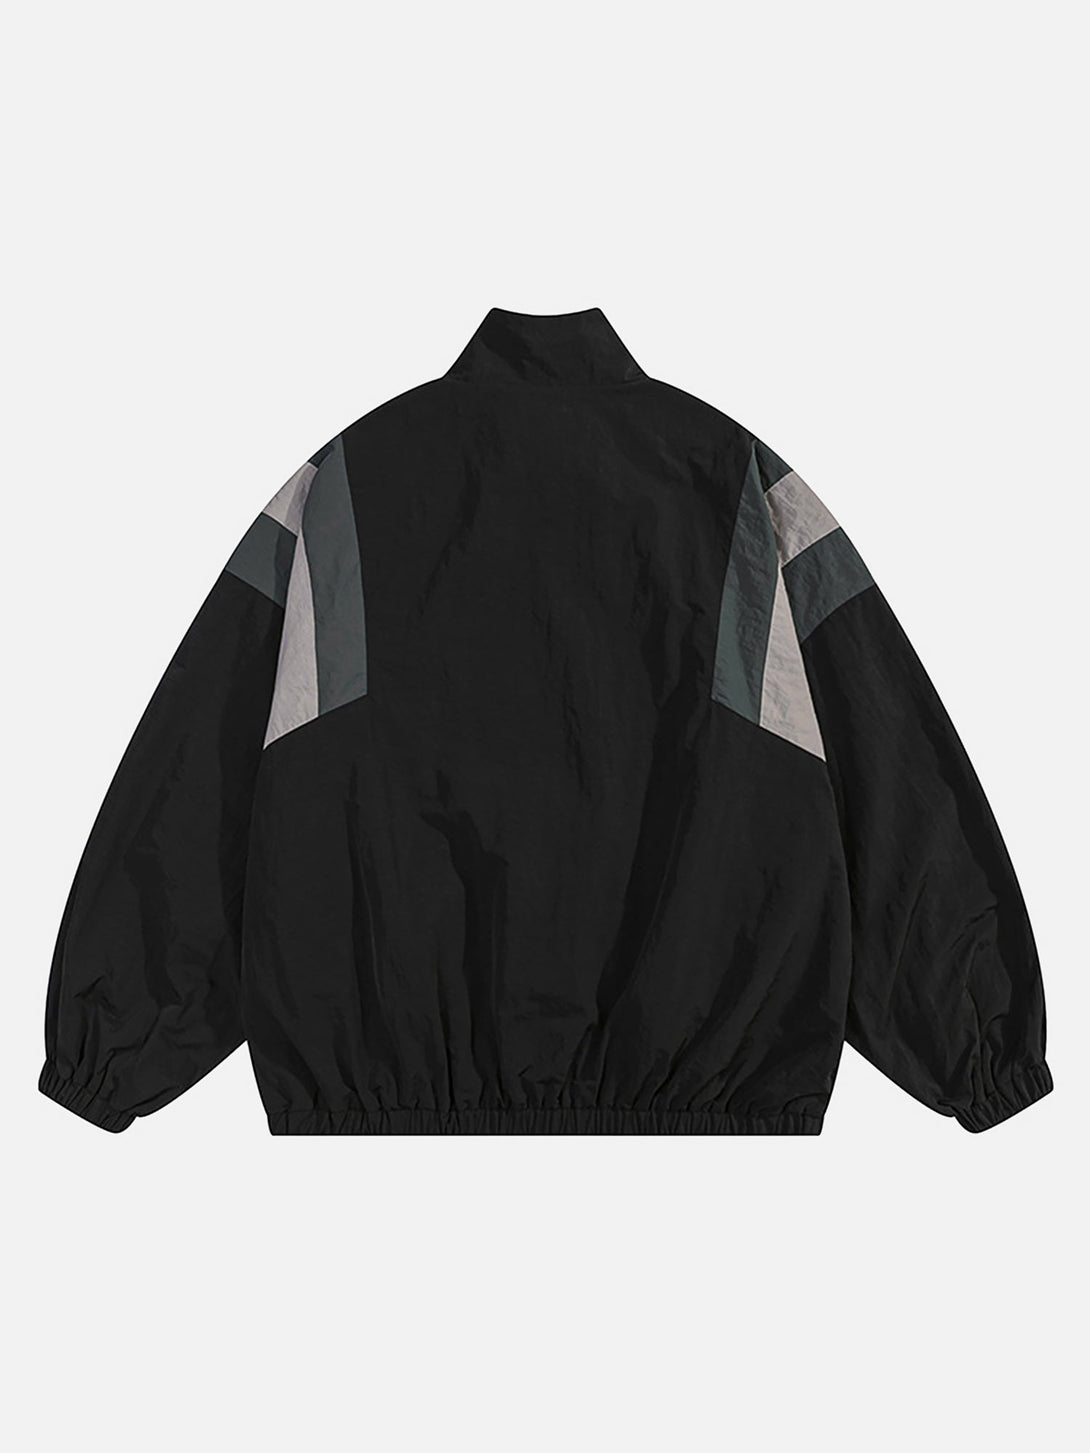 Majesda® - Patchwork Contrasting Windbreaker Jacket- Outfit Ideas - Streetwear Fashion - majesda.com